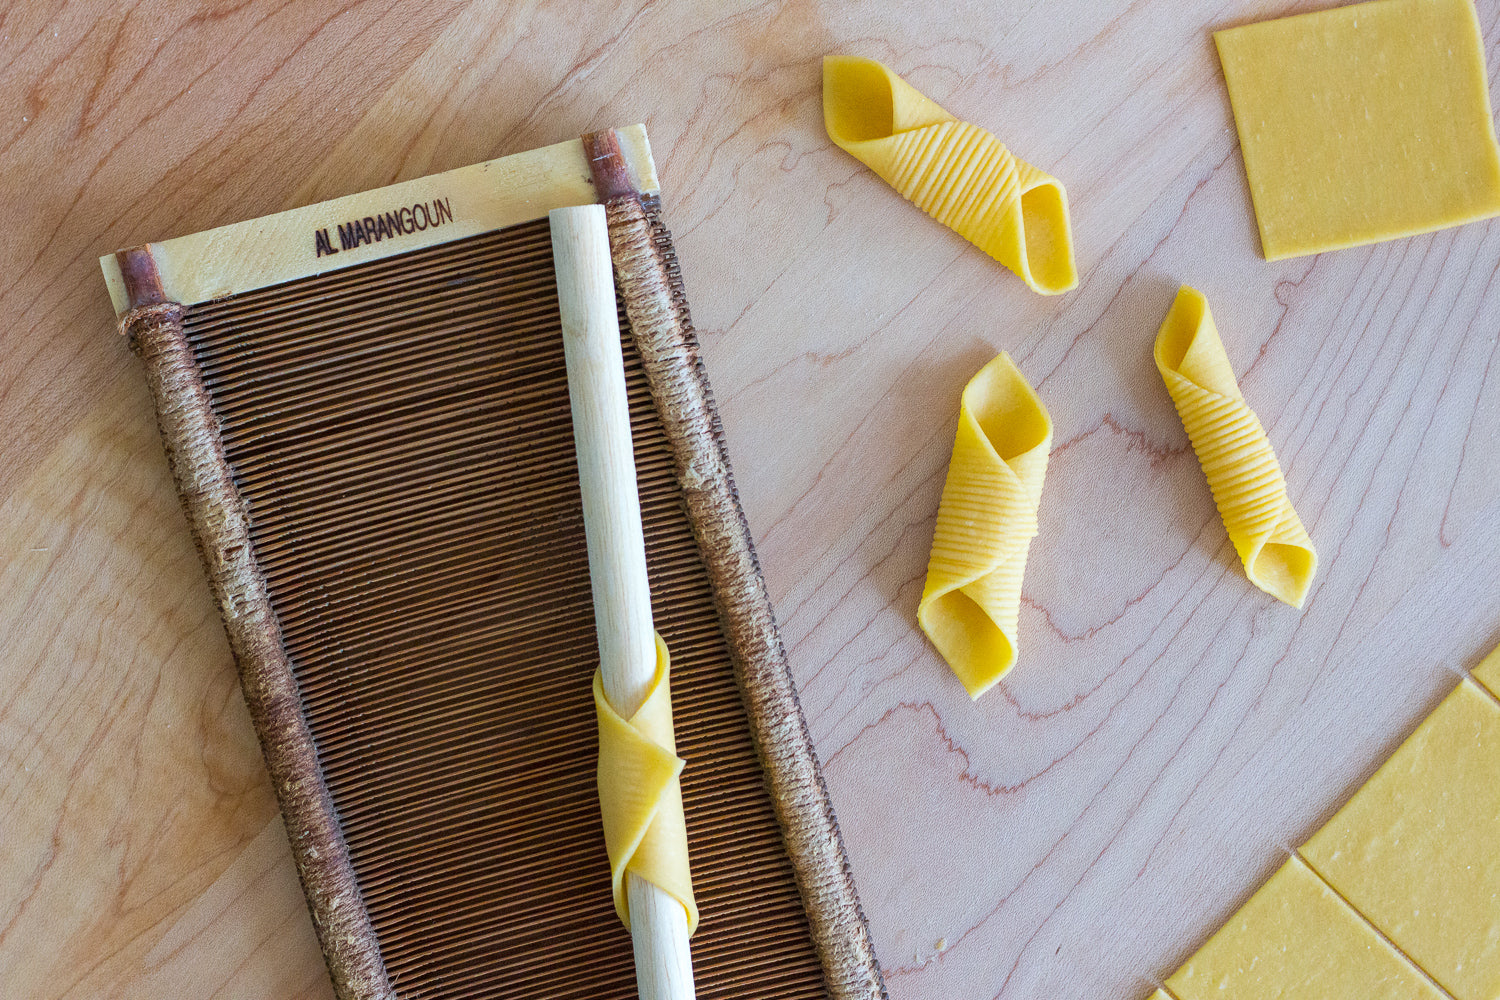 Homemade garganelli pasta with pasta comb